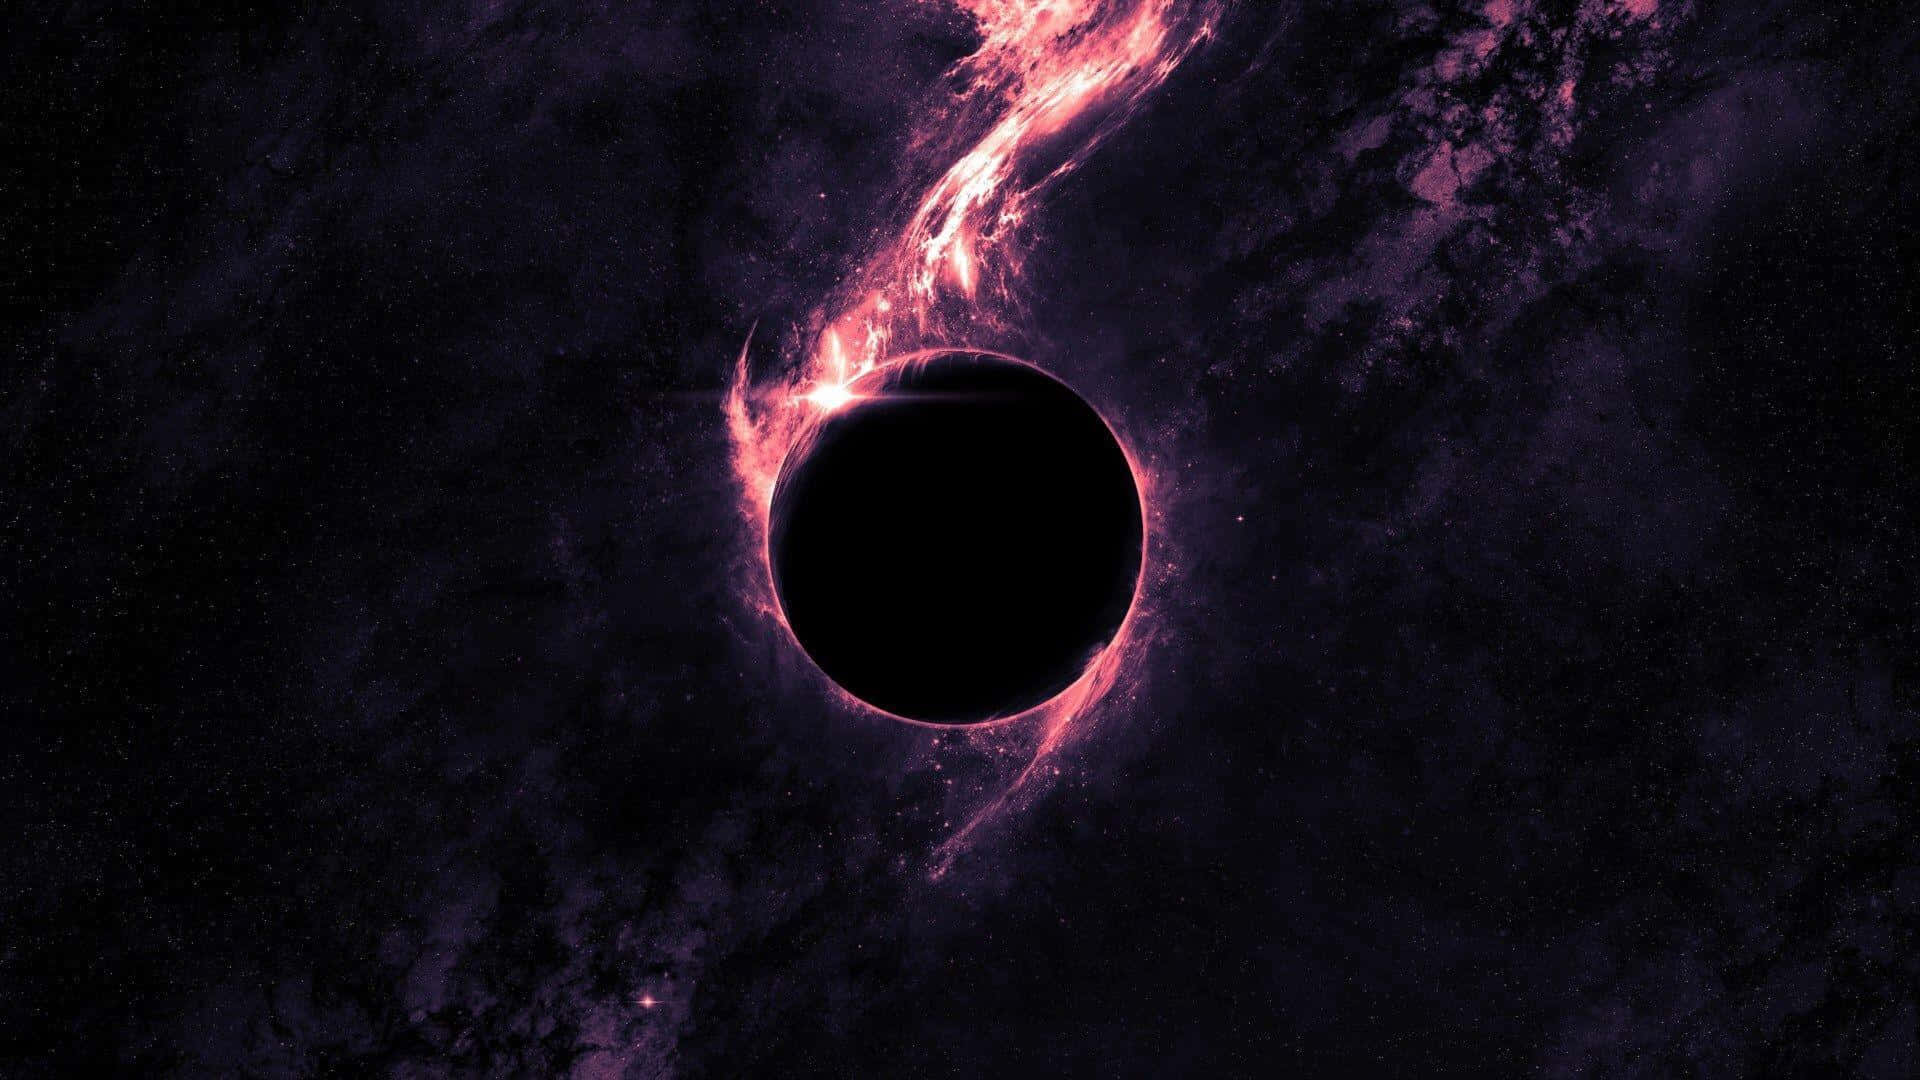 A mesmerizing black hole sun slowly enveloping a distant nebula Wallpaper